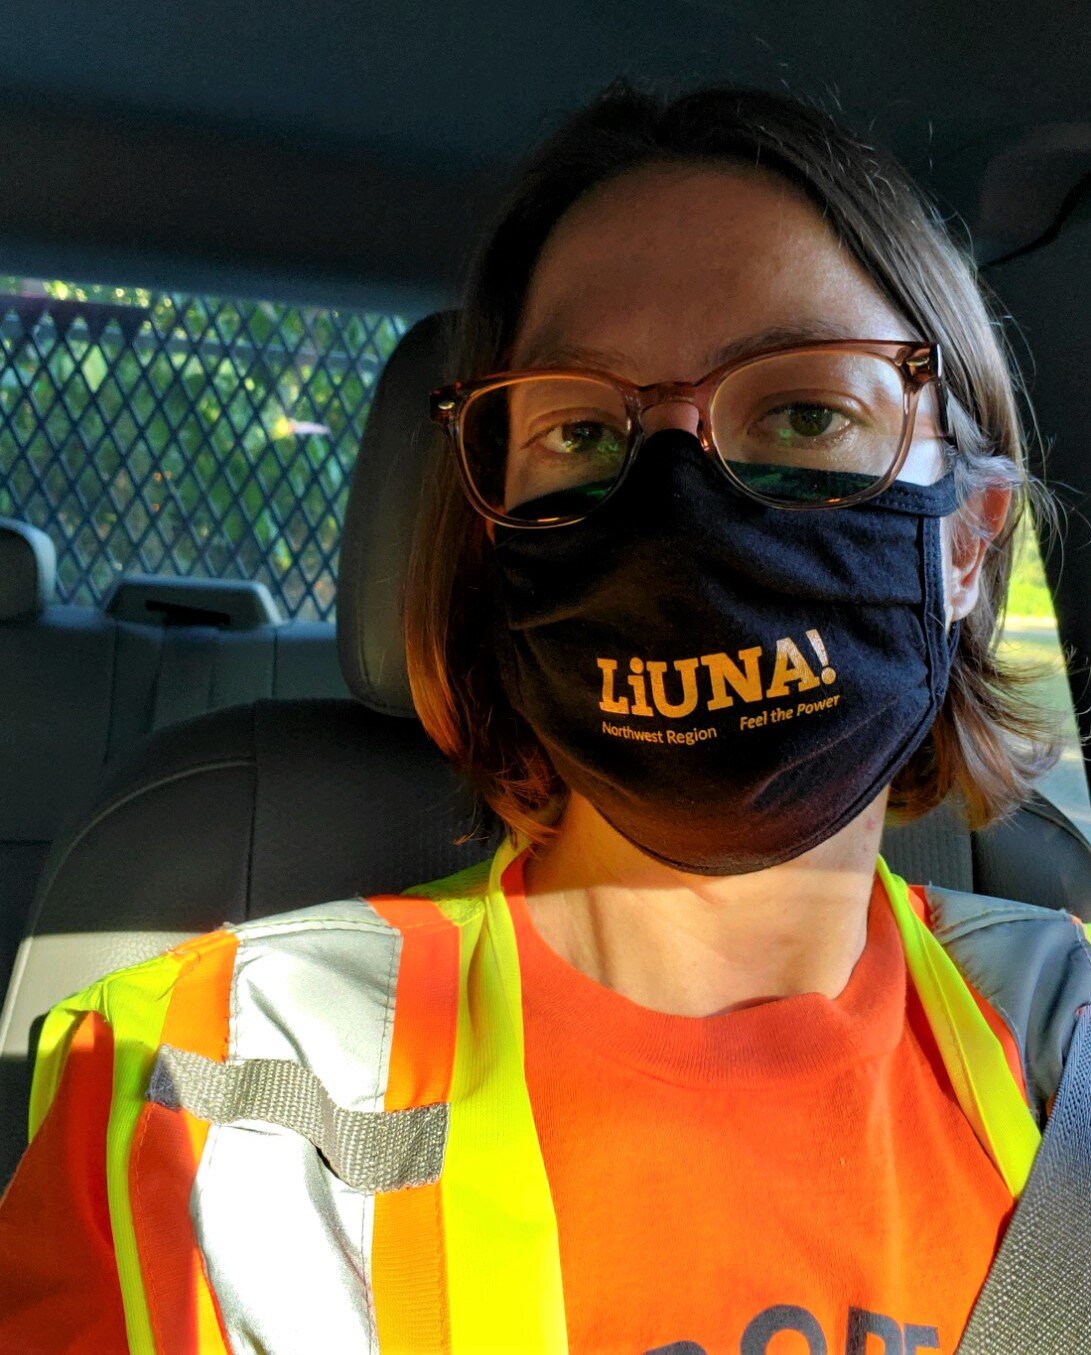 Claire LIUNA mask August 2020.jpg